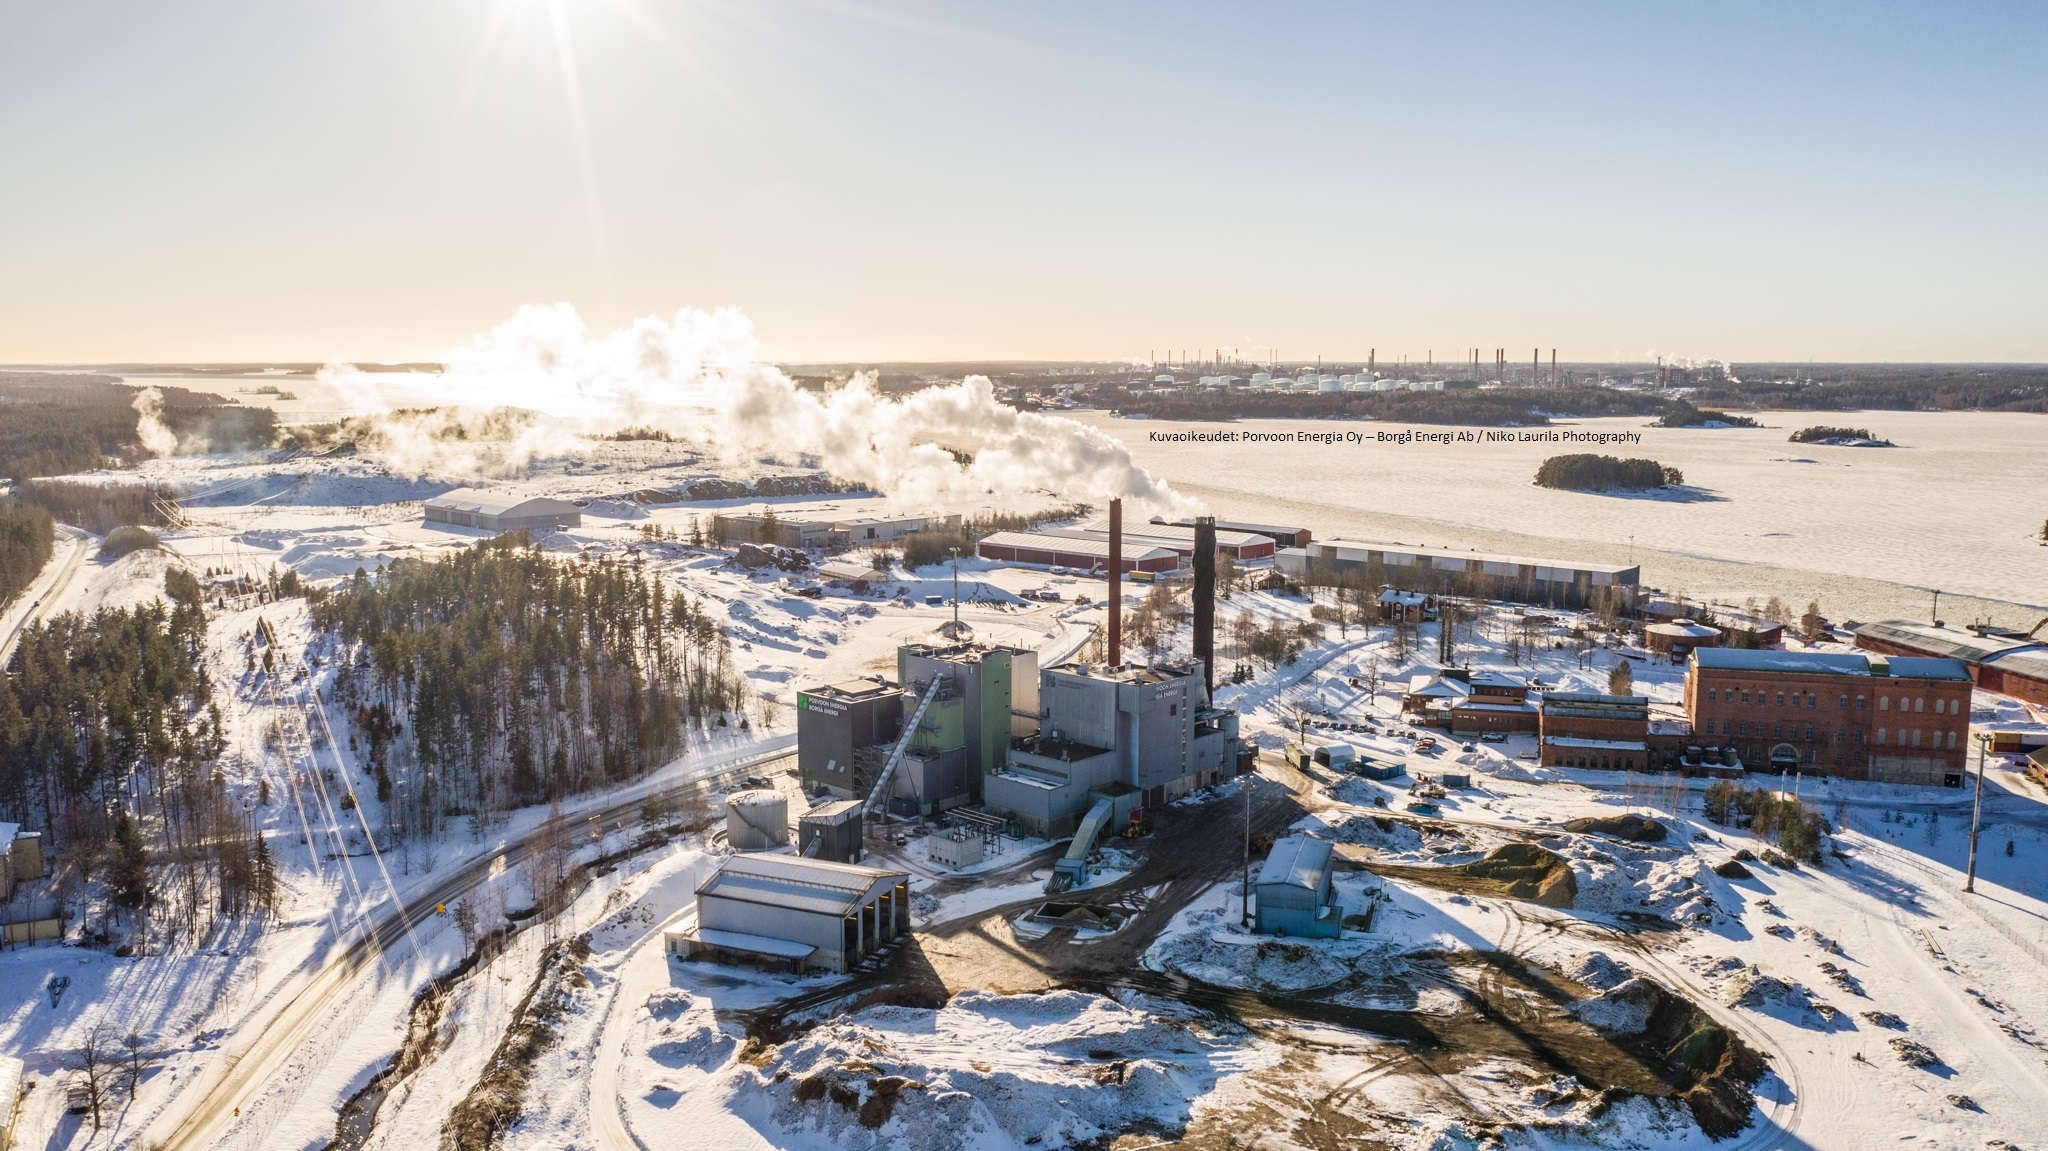 Porvoon Energia Oy Tolkkinen power plant (Niko Laurila Photography)